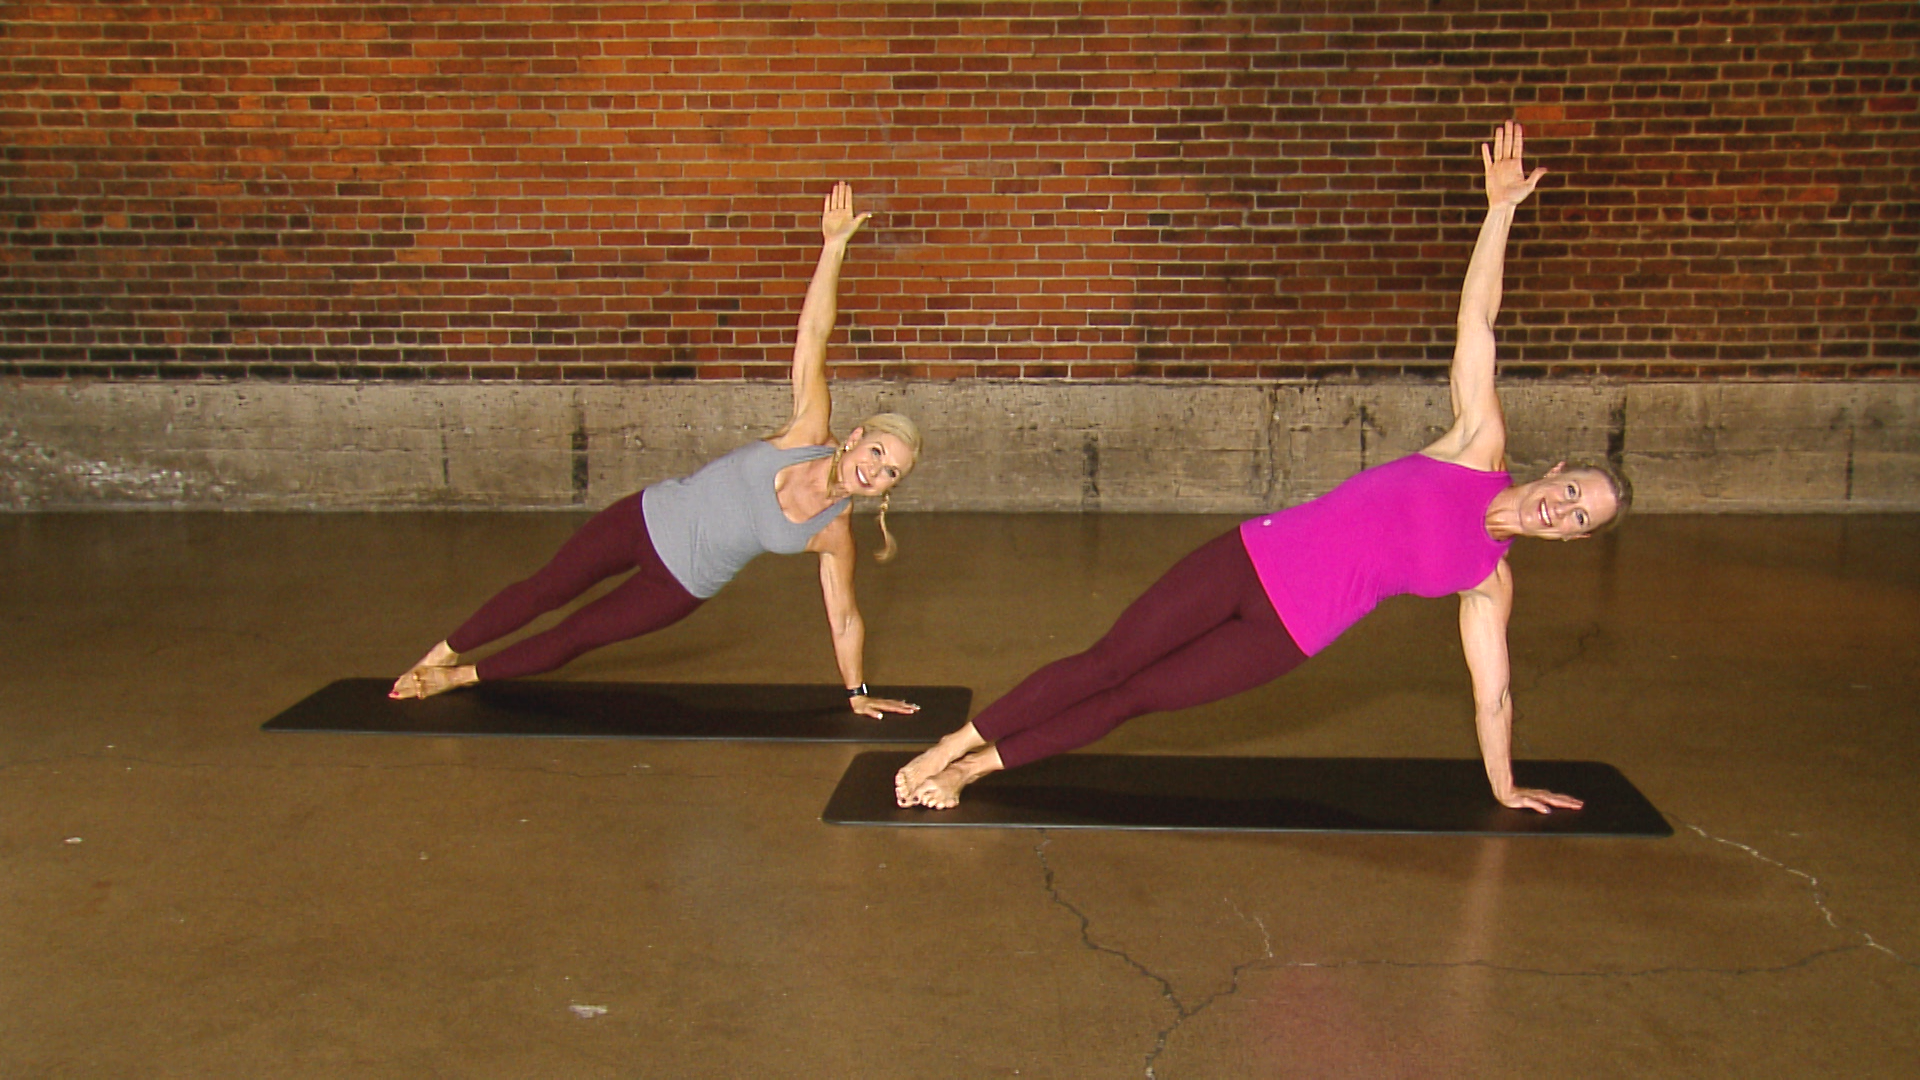 Two women doing side planks